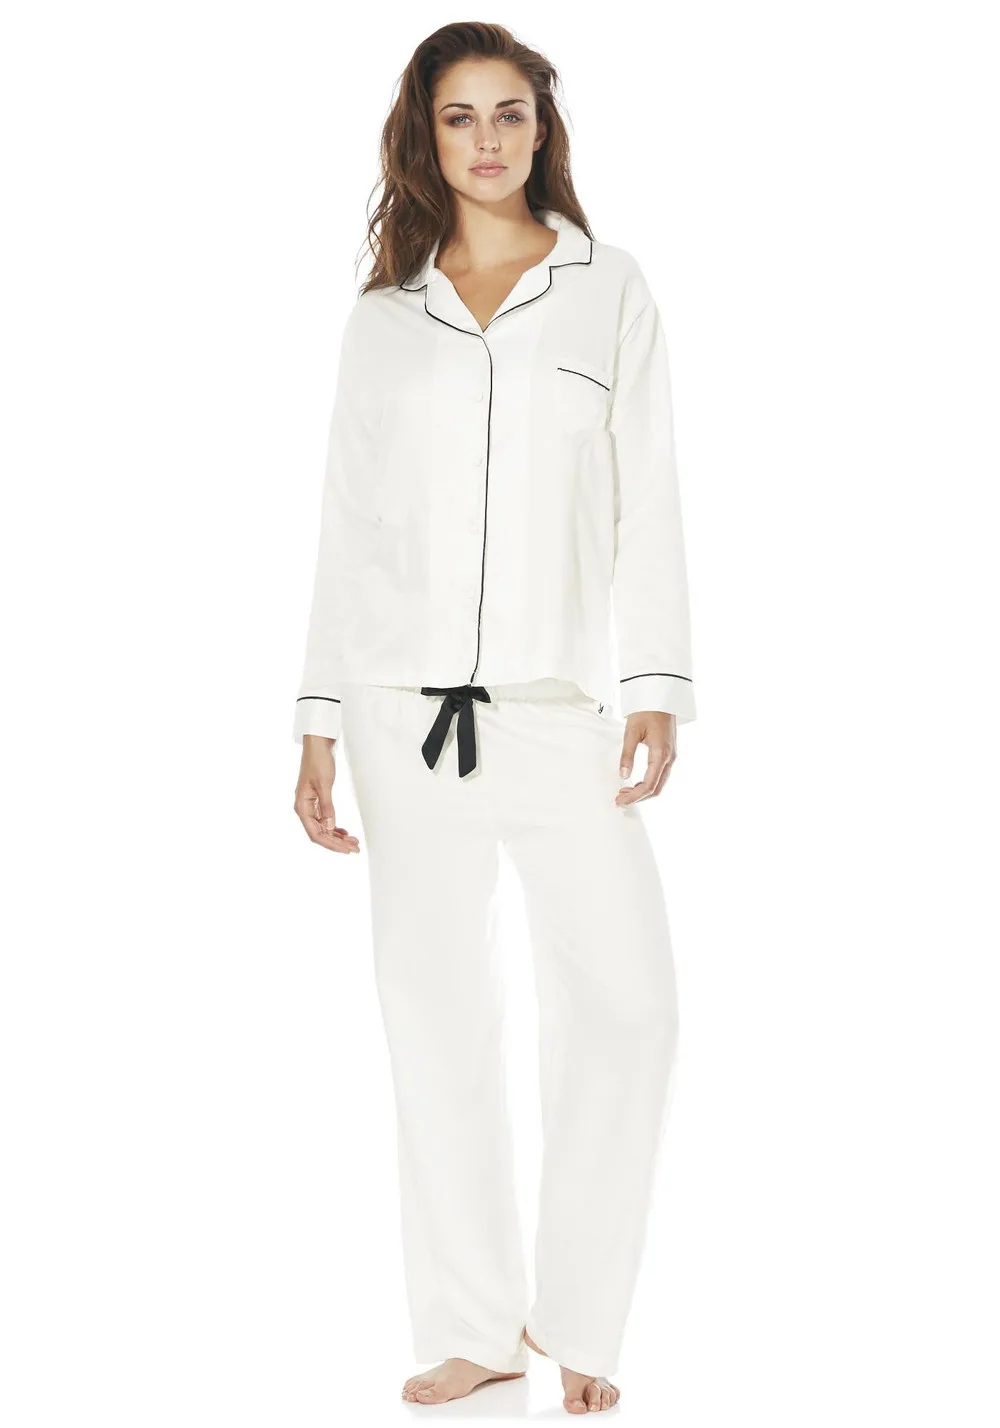 White Plain Button Up Satin Pajamas - Buy Satin Pajamas,White Plain ...